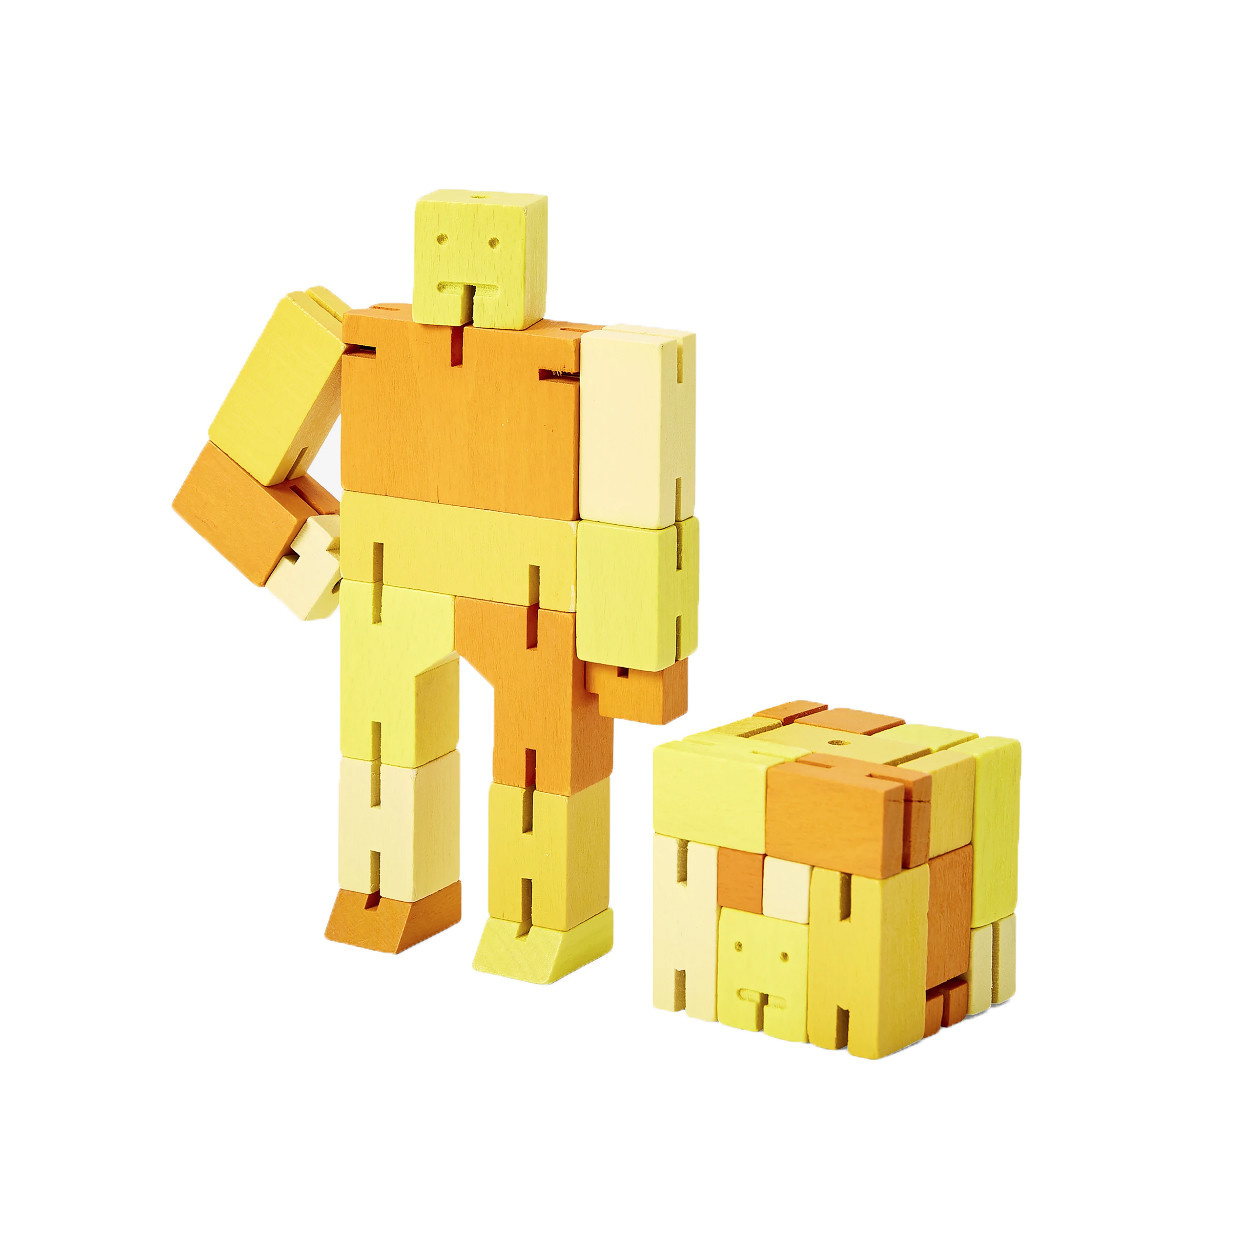 Areaware Cubebot Capsule Small - Yellow